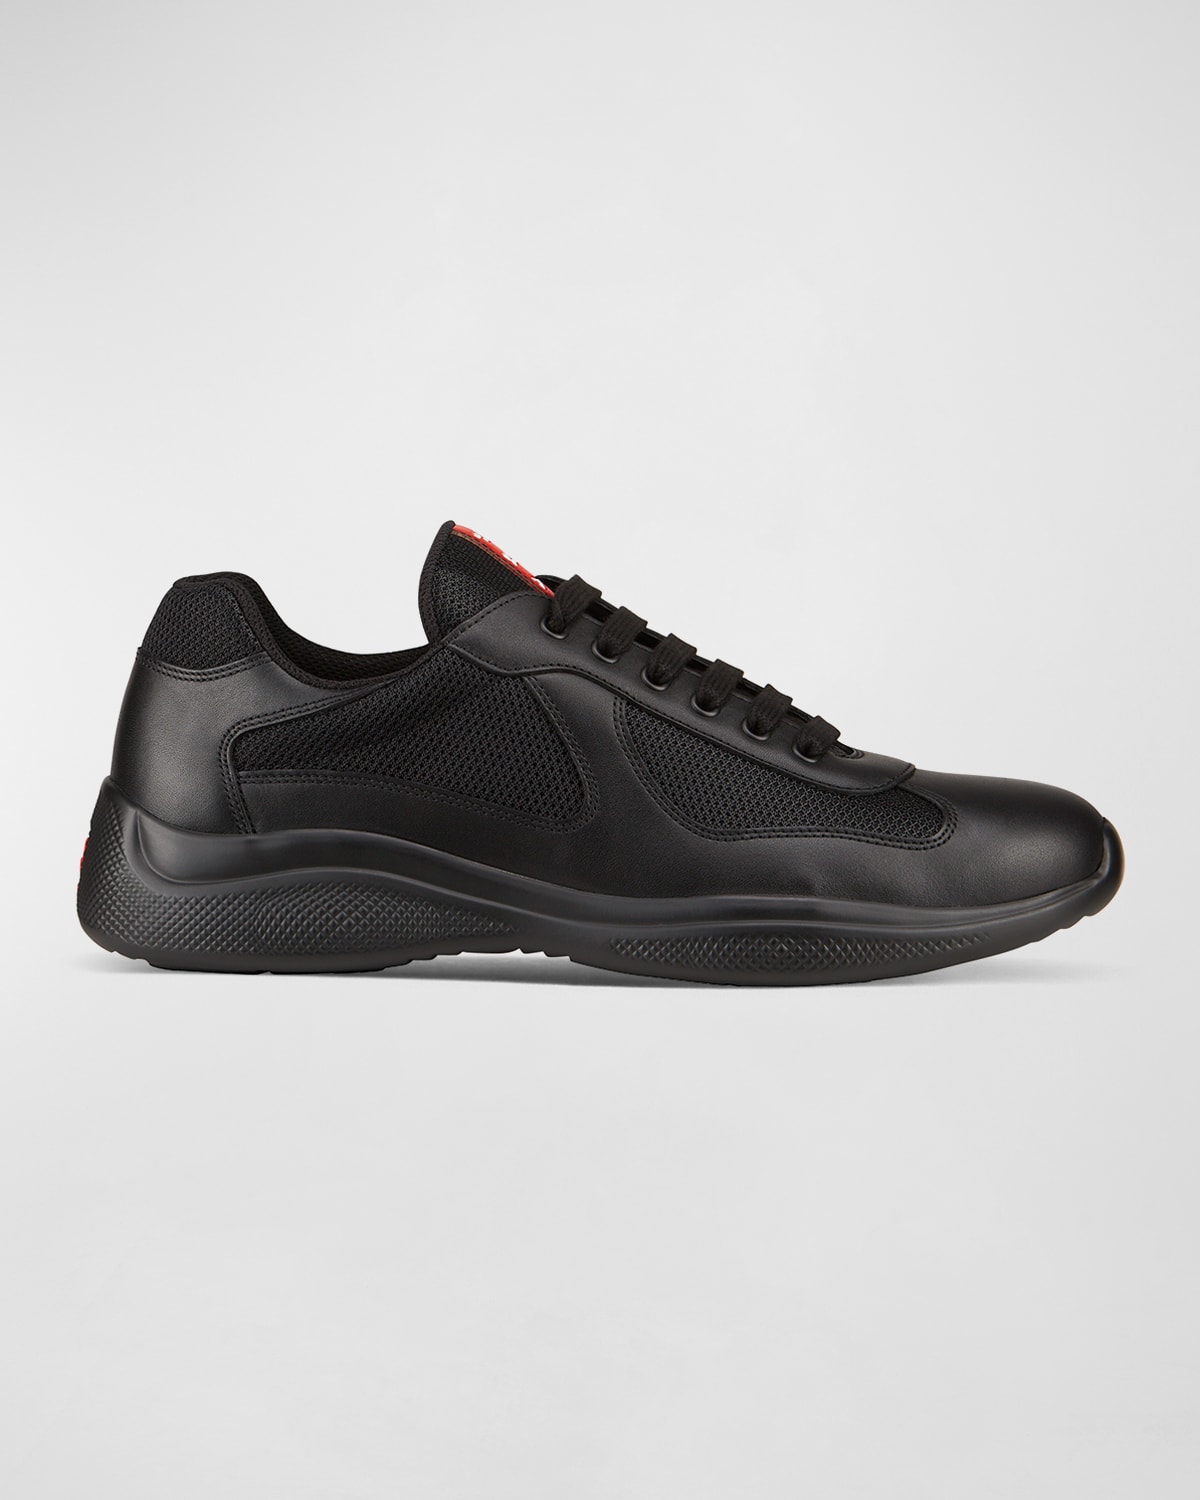 Prada Men's New America's Cup Leather Low-Top Sneakers | Neiman Marcus